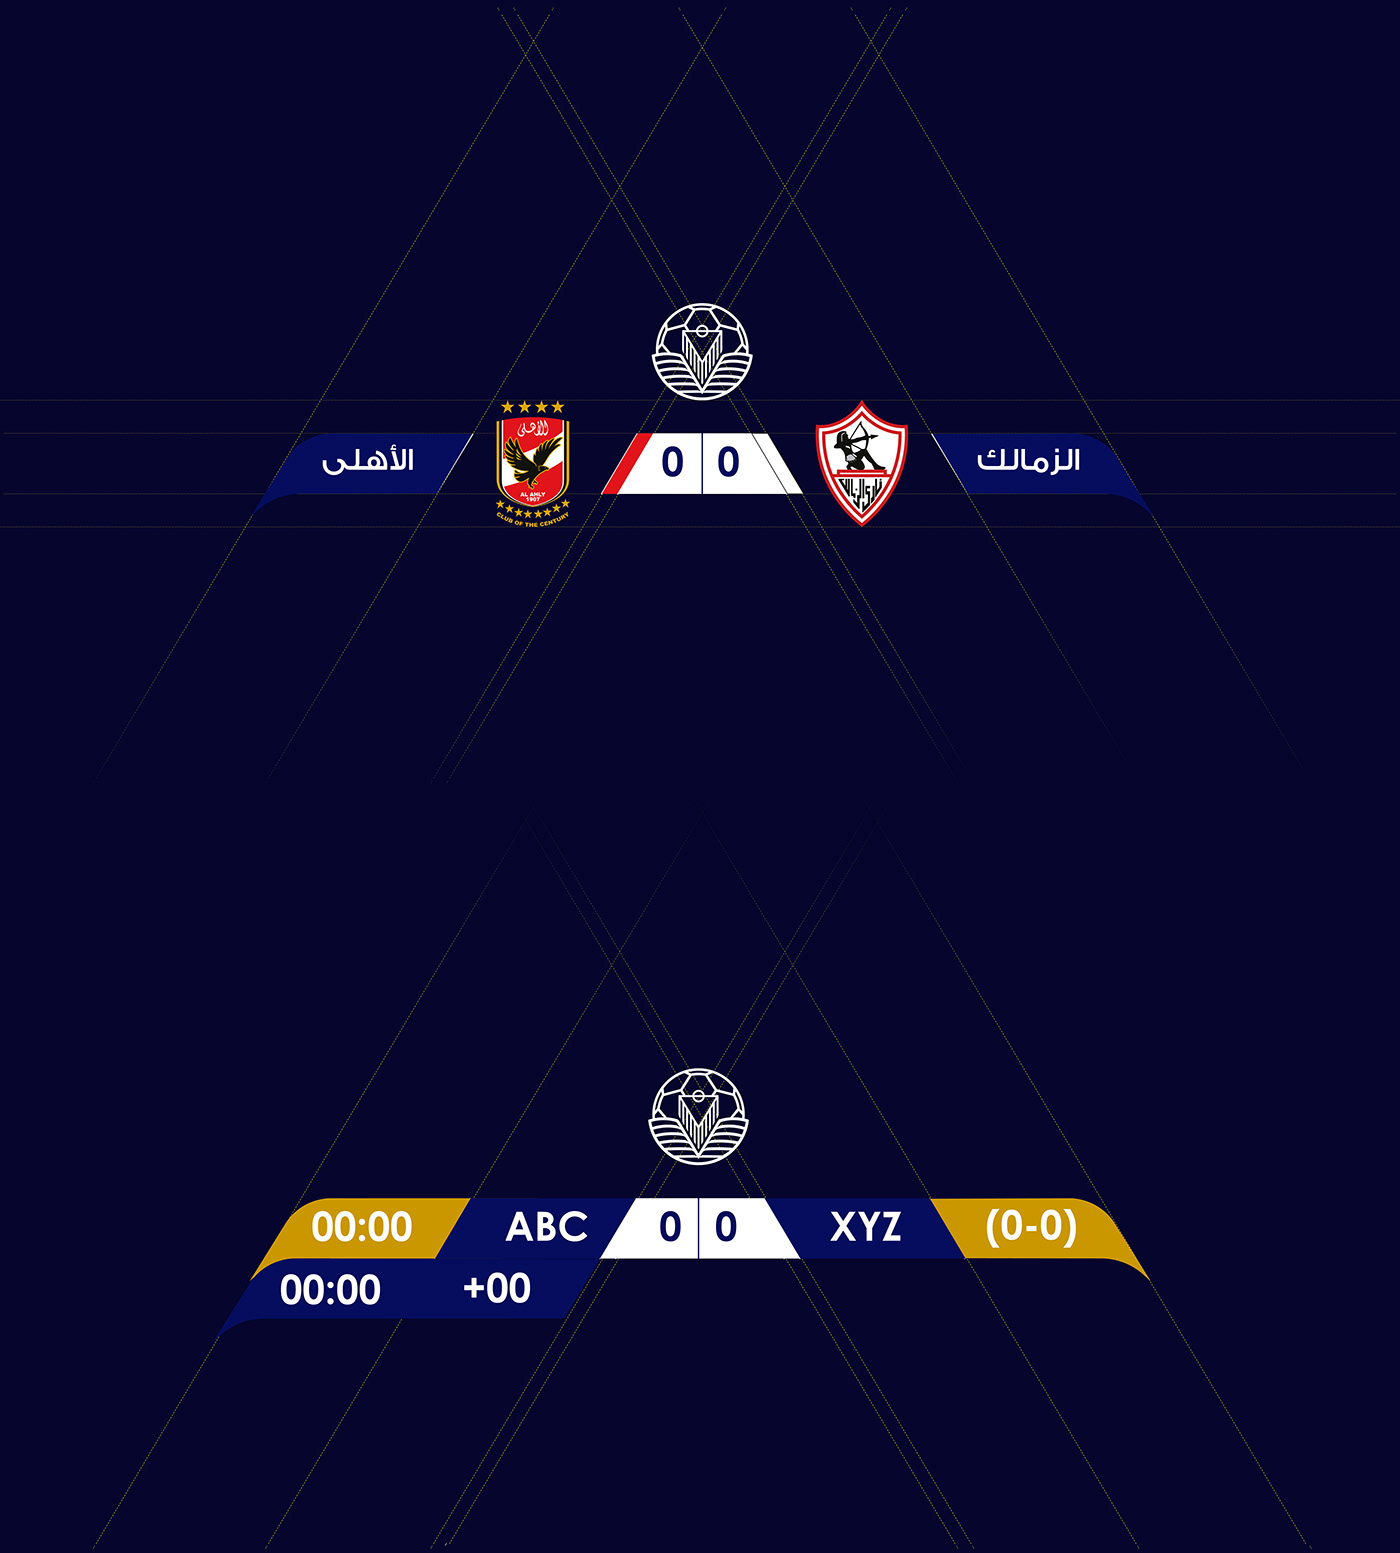 branding  eagle egypt EPL football grids Premier League pyramids soccer sports